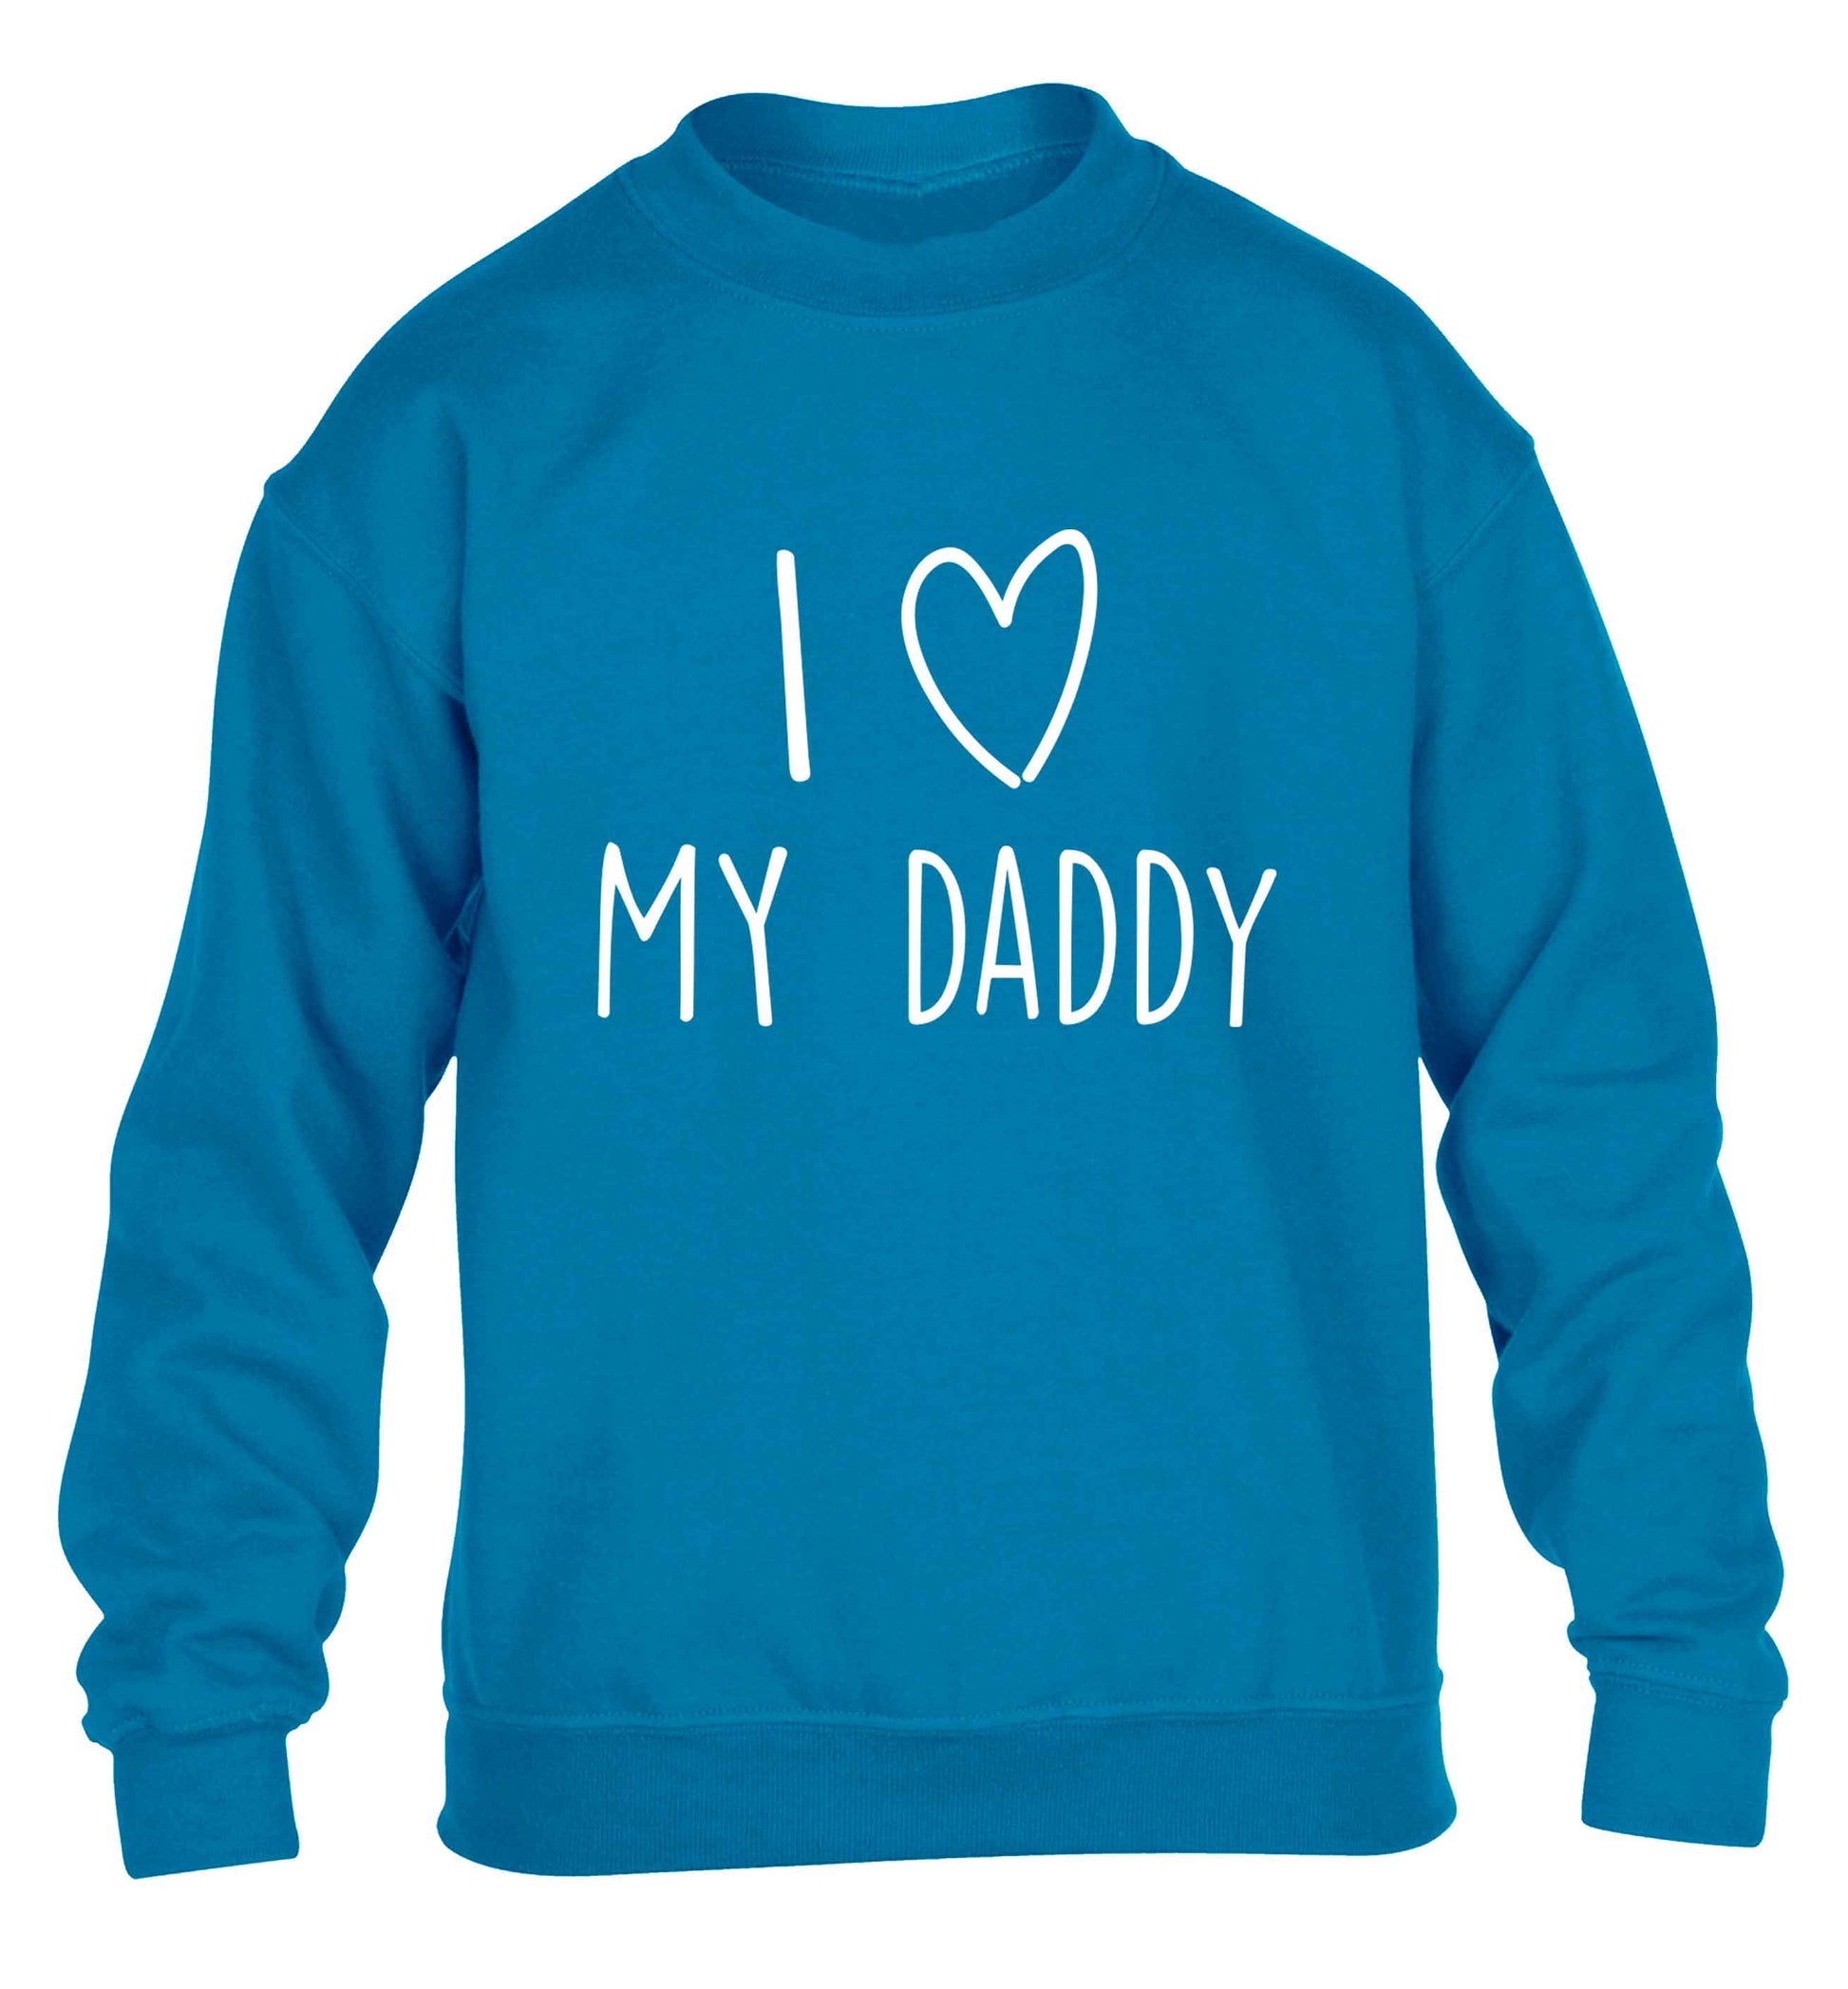 I love my daddy children's blue sweater 12-13 Years